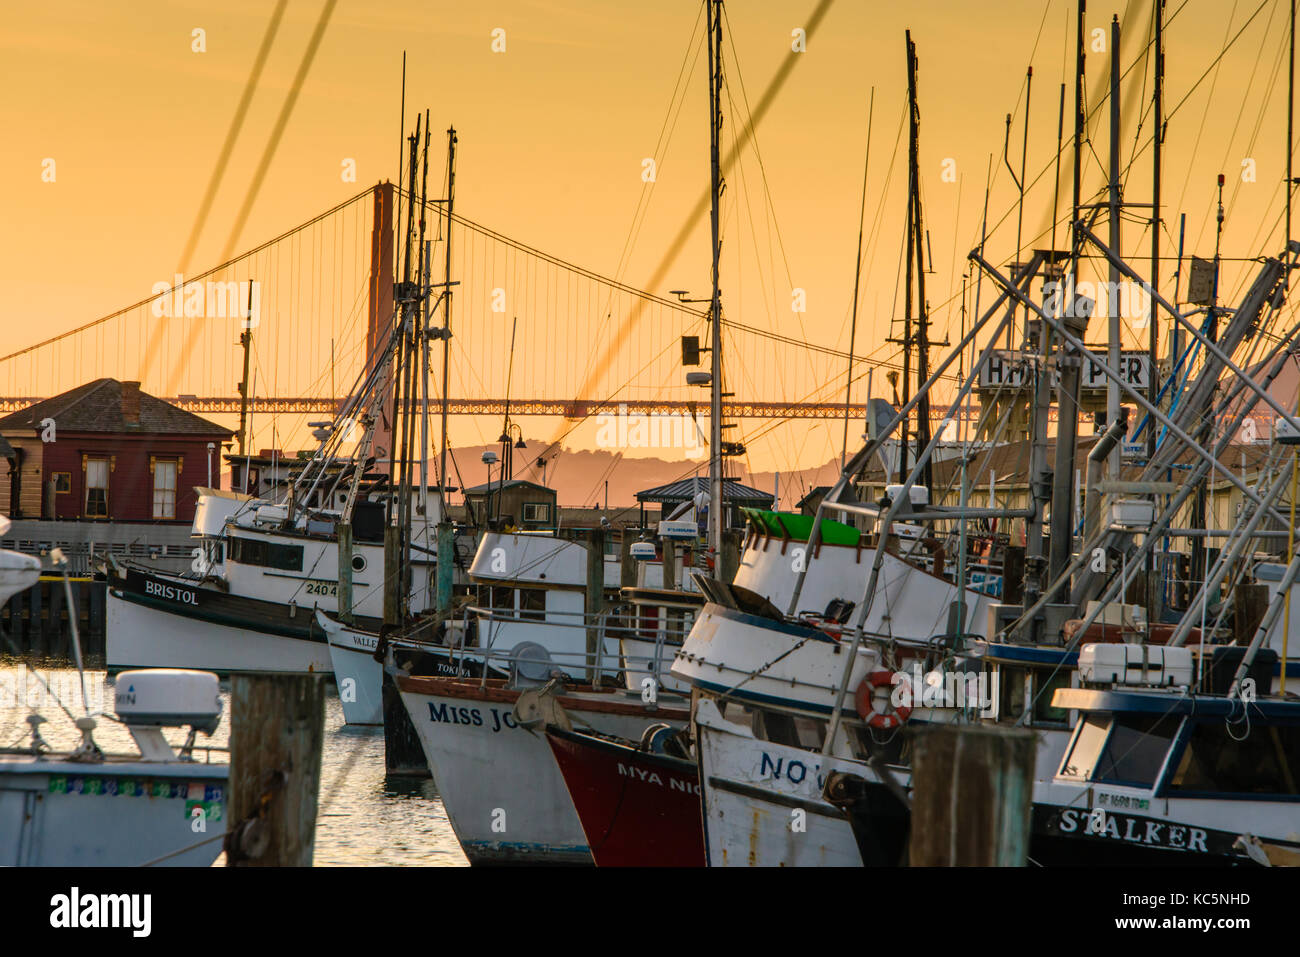 Fisherman's Wharf and the Golden Gate Bridge at sunset, San Francisco, California Stock Photo